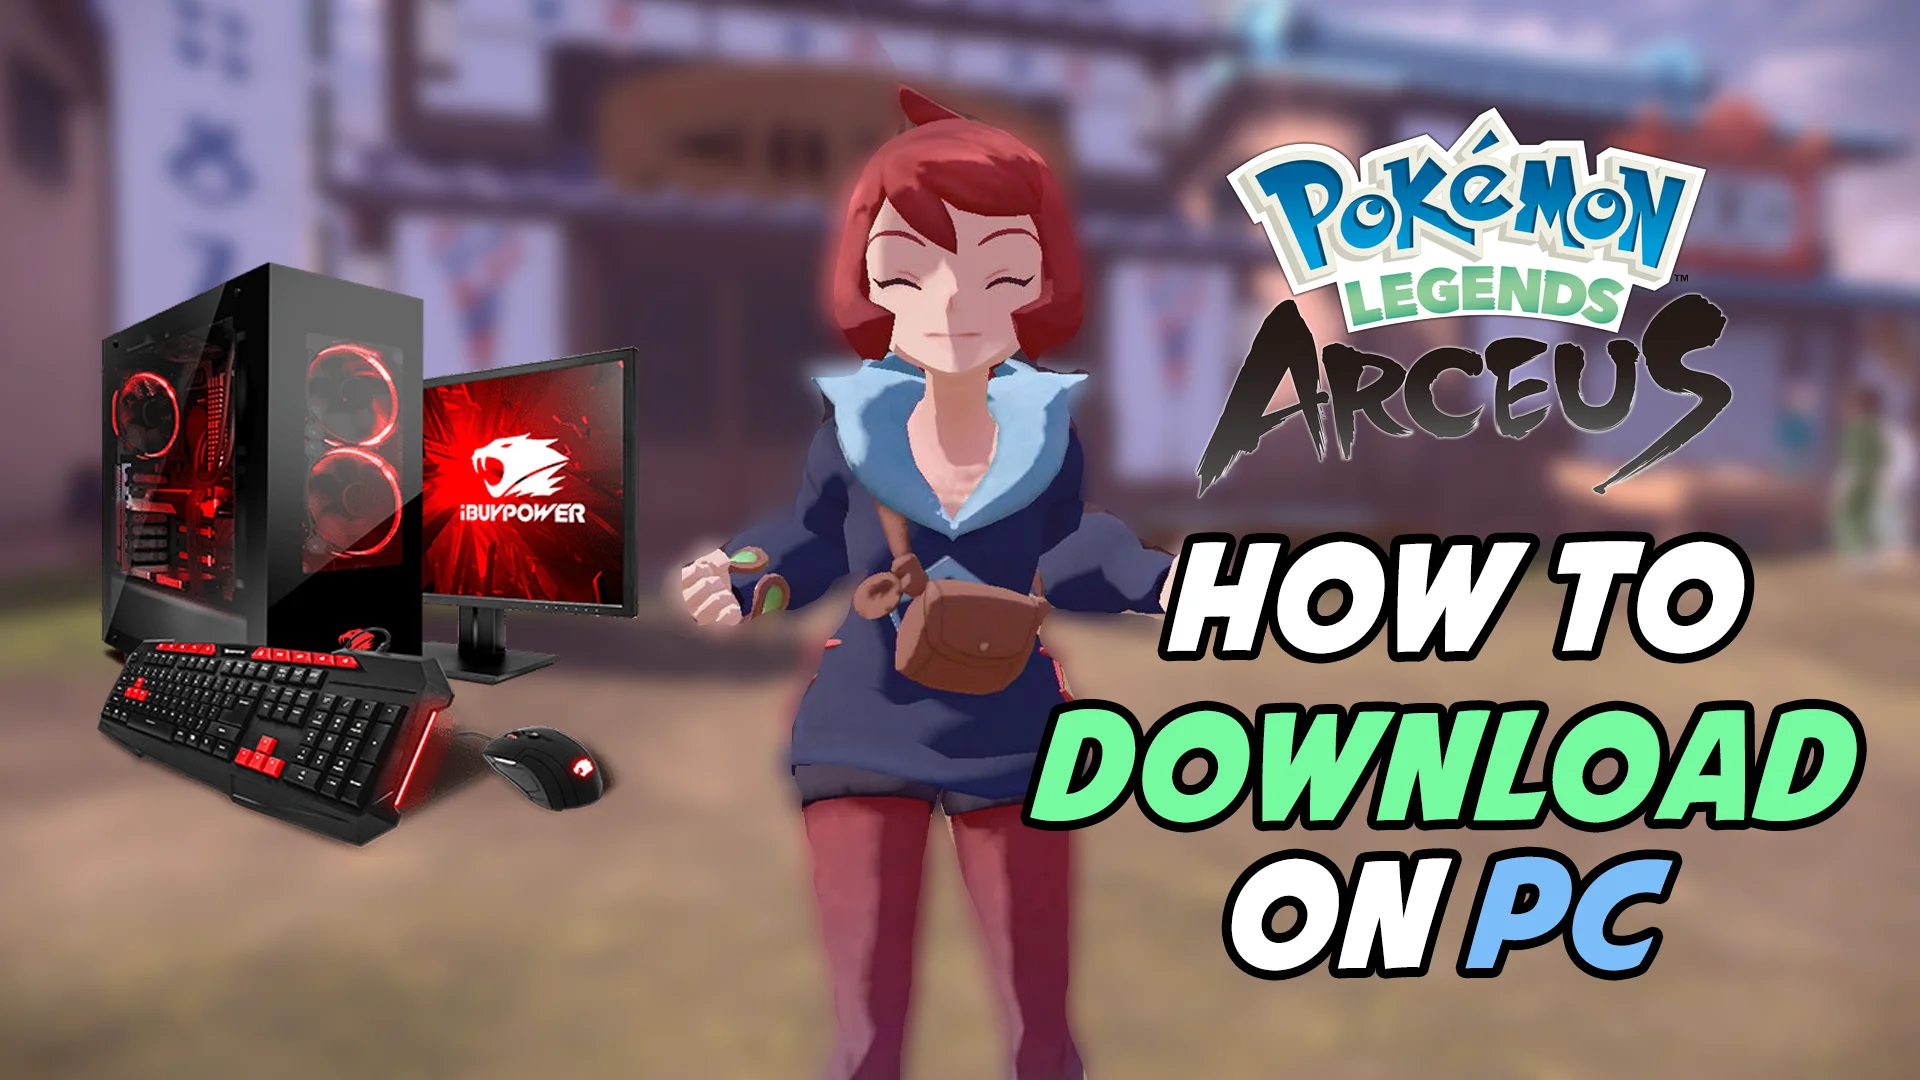 How to make Pokemon Legends Arceus Playable on PC! (XCI ROM) on Vimeo